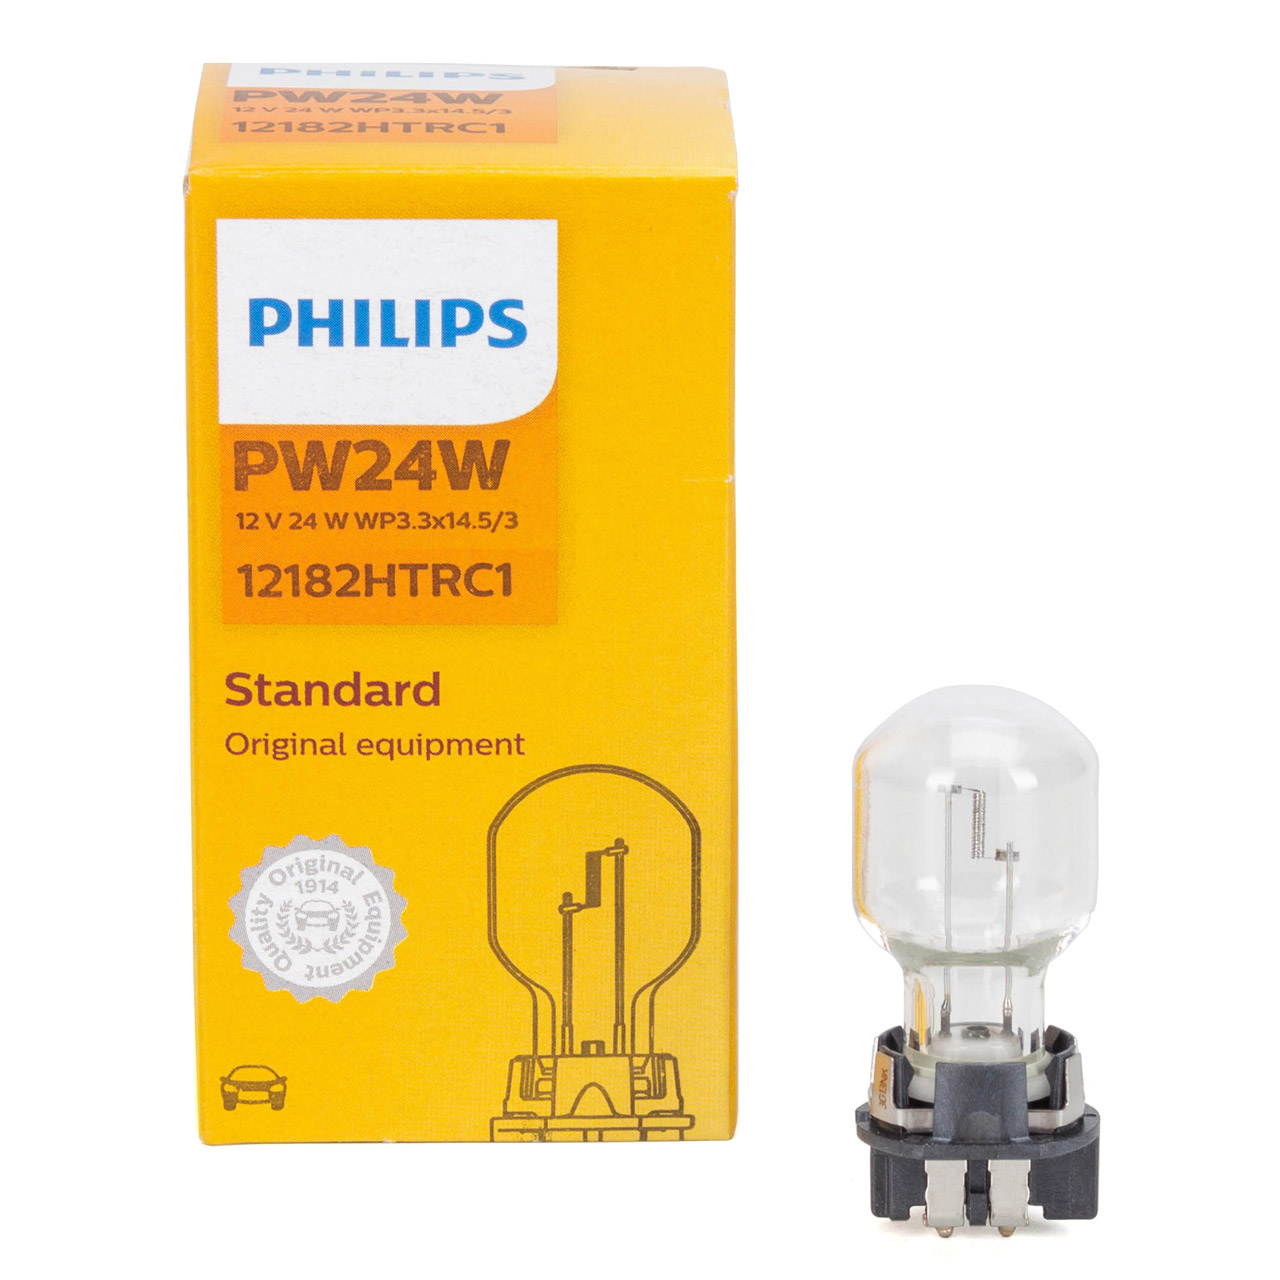 PHILIPS Halogenlampe Blinkleuchte Bremsleuchte Tagfahrleuchte PW24W 12V 24W WP3.3x14.5/3